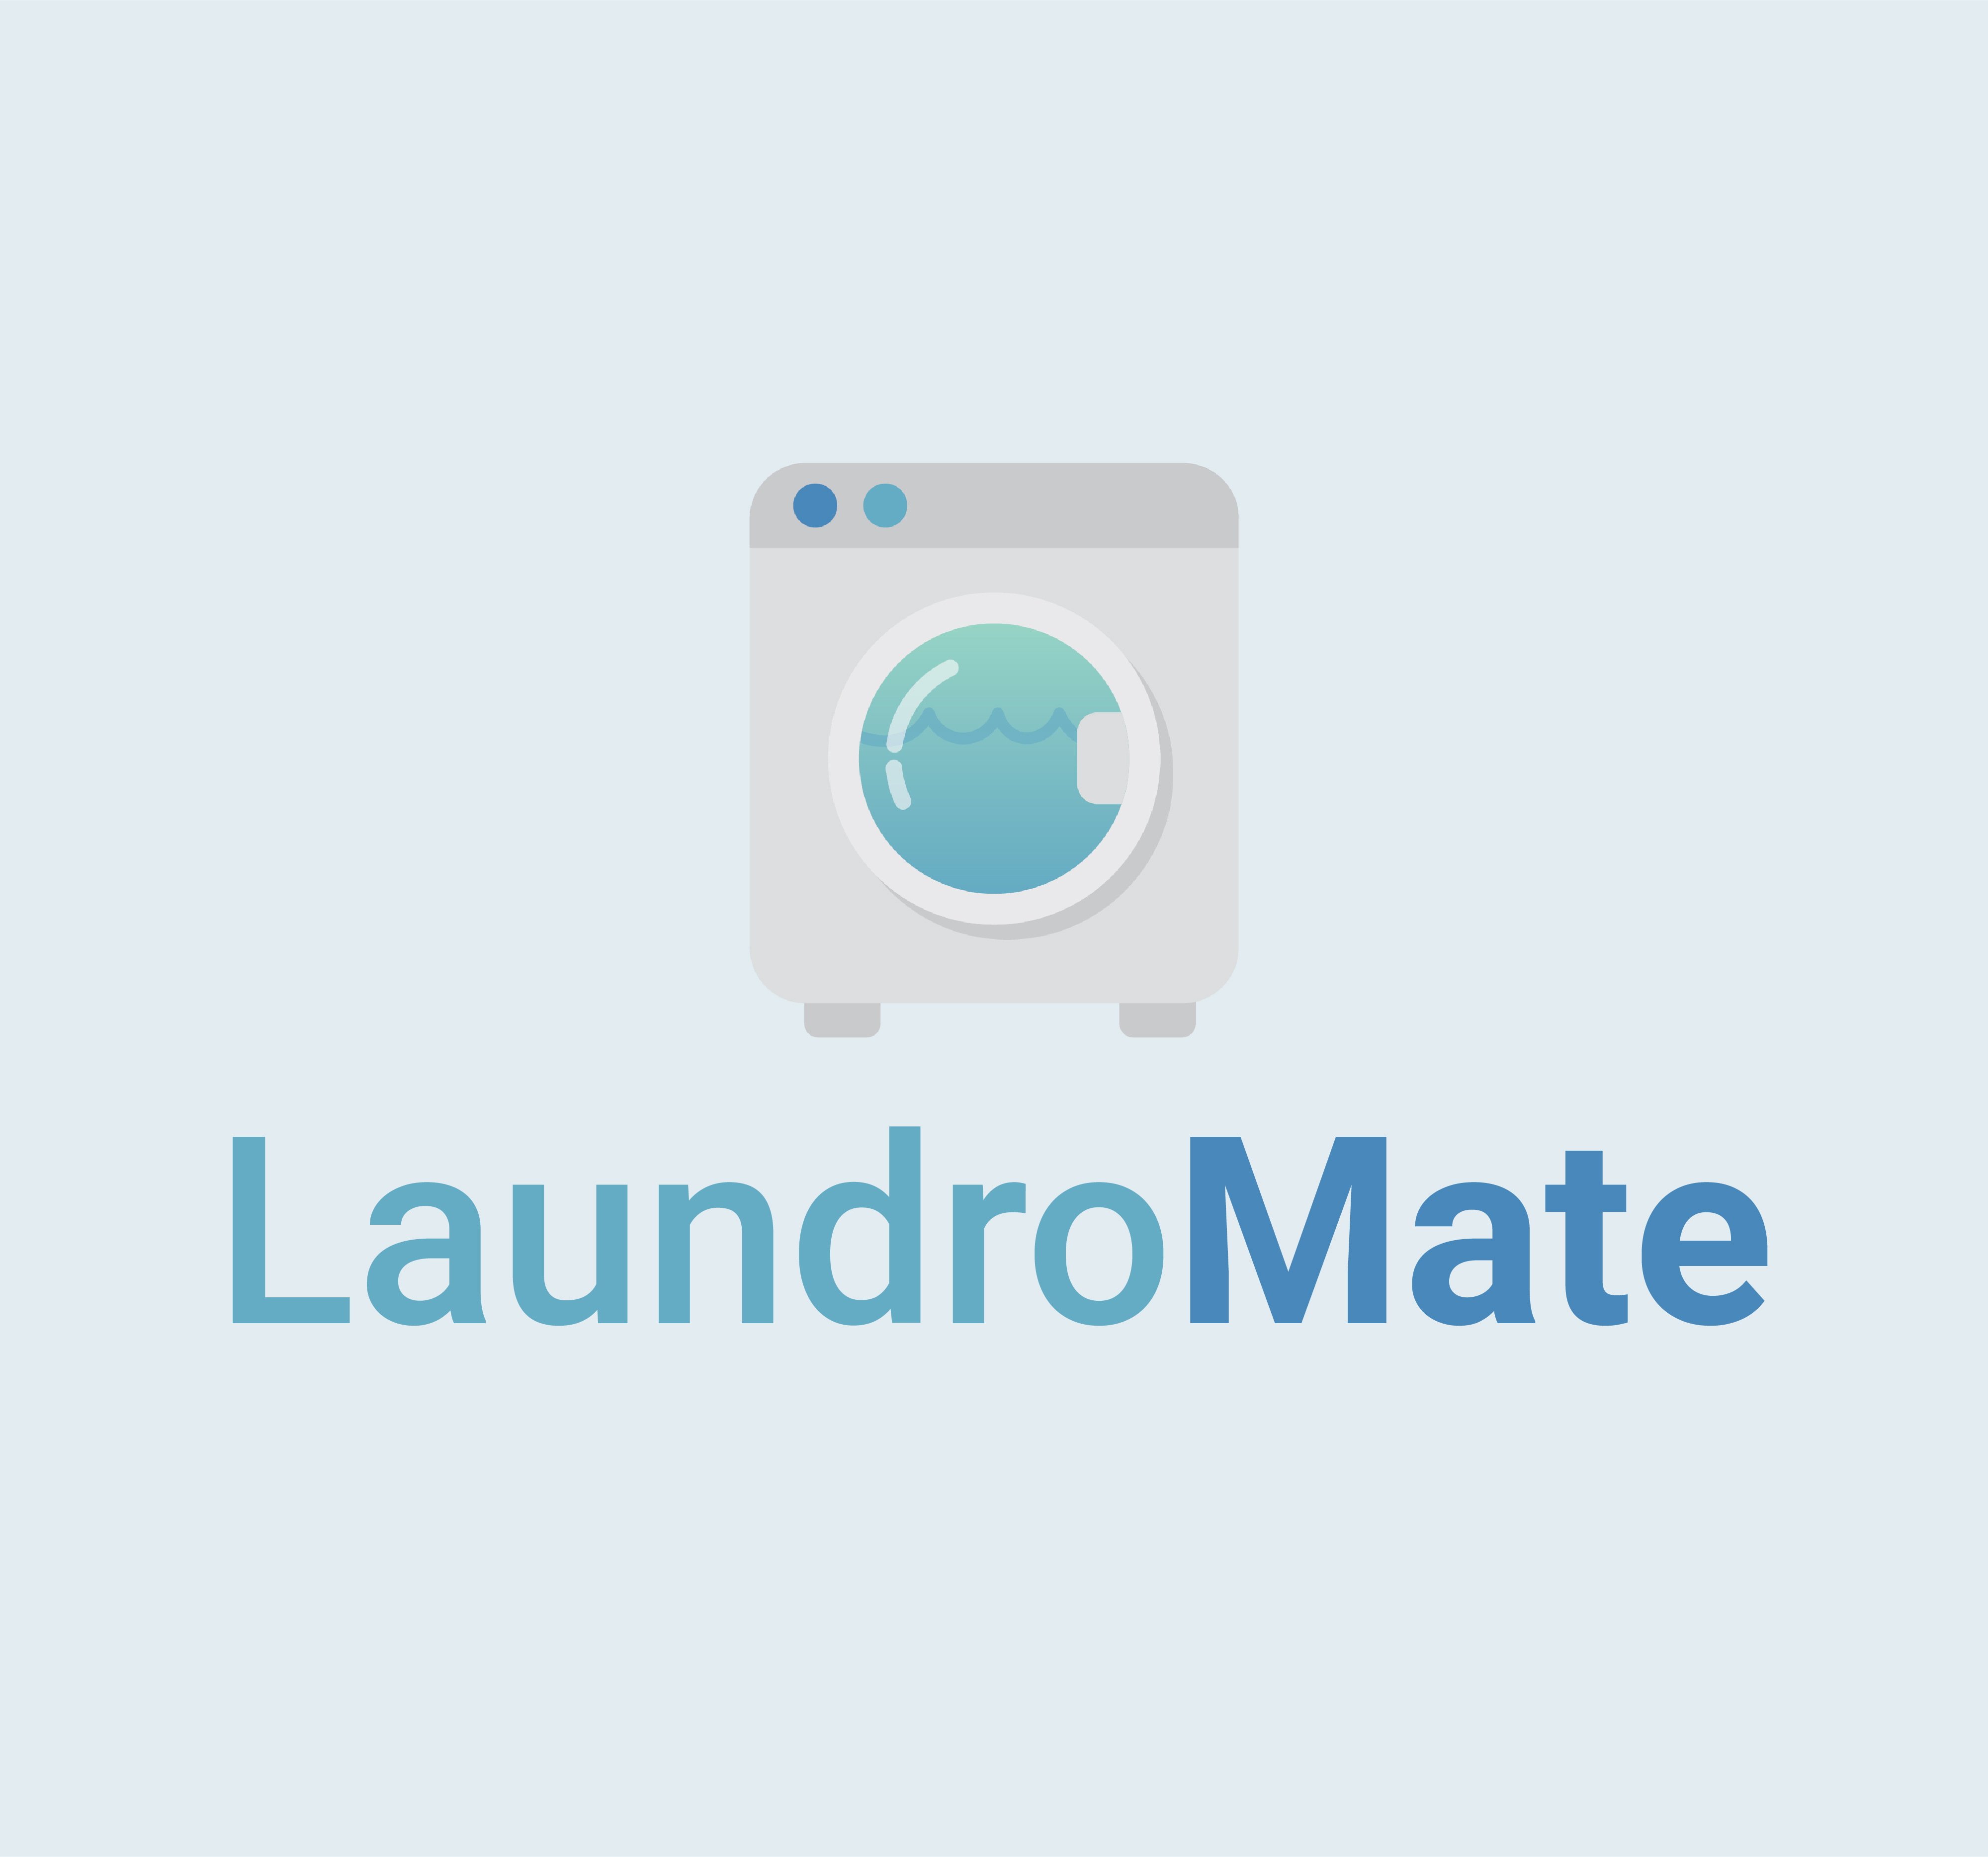 LaundroMate Logo